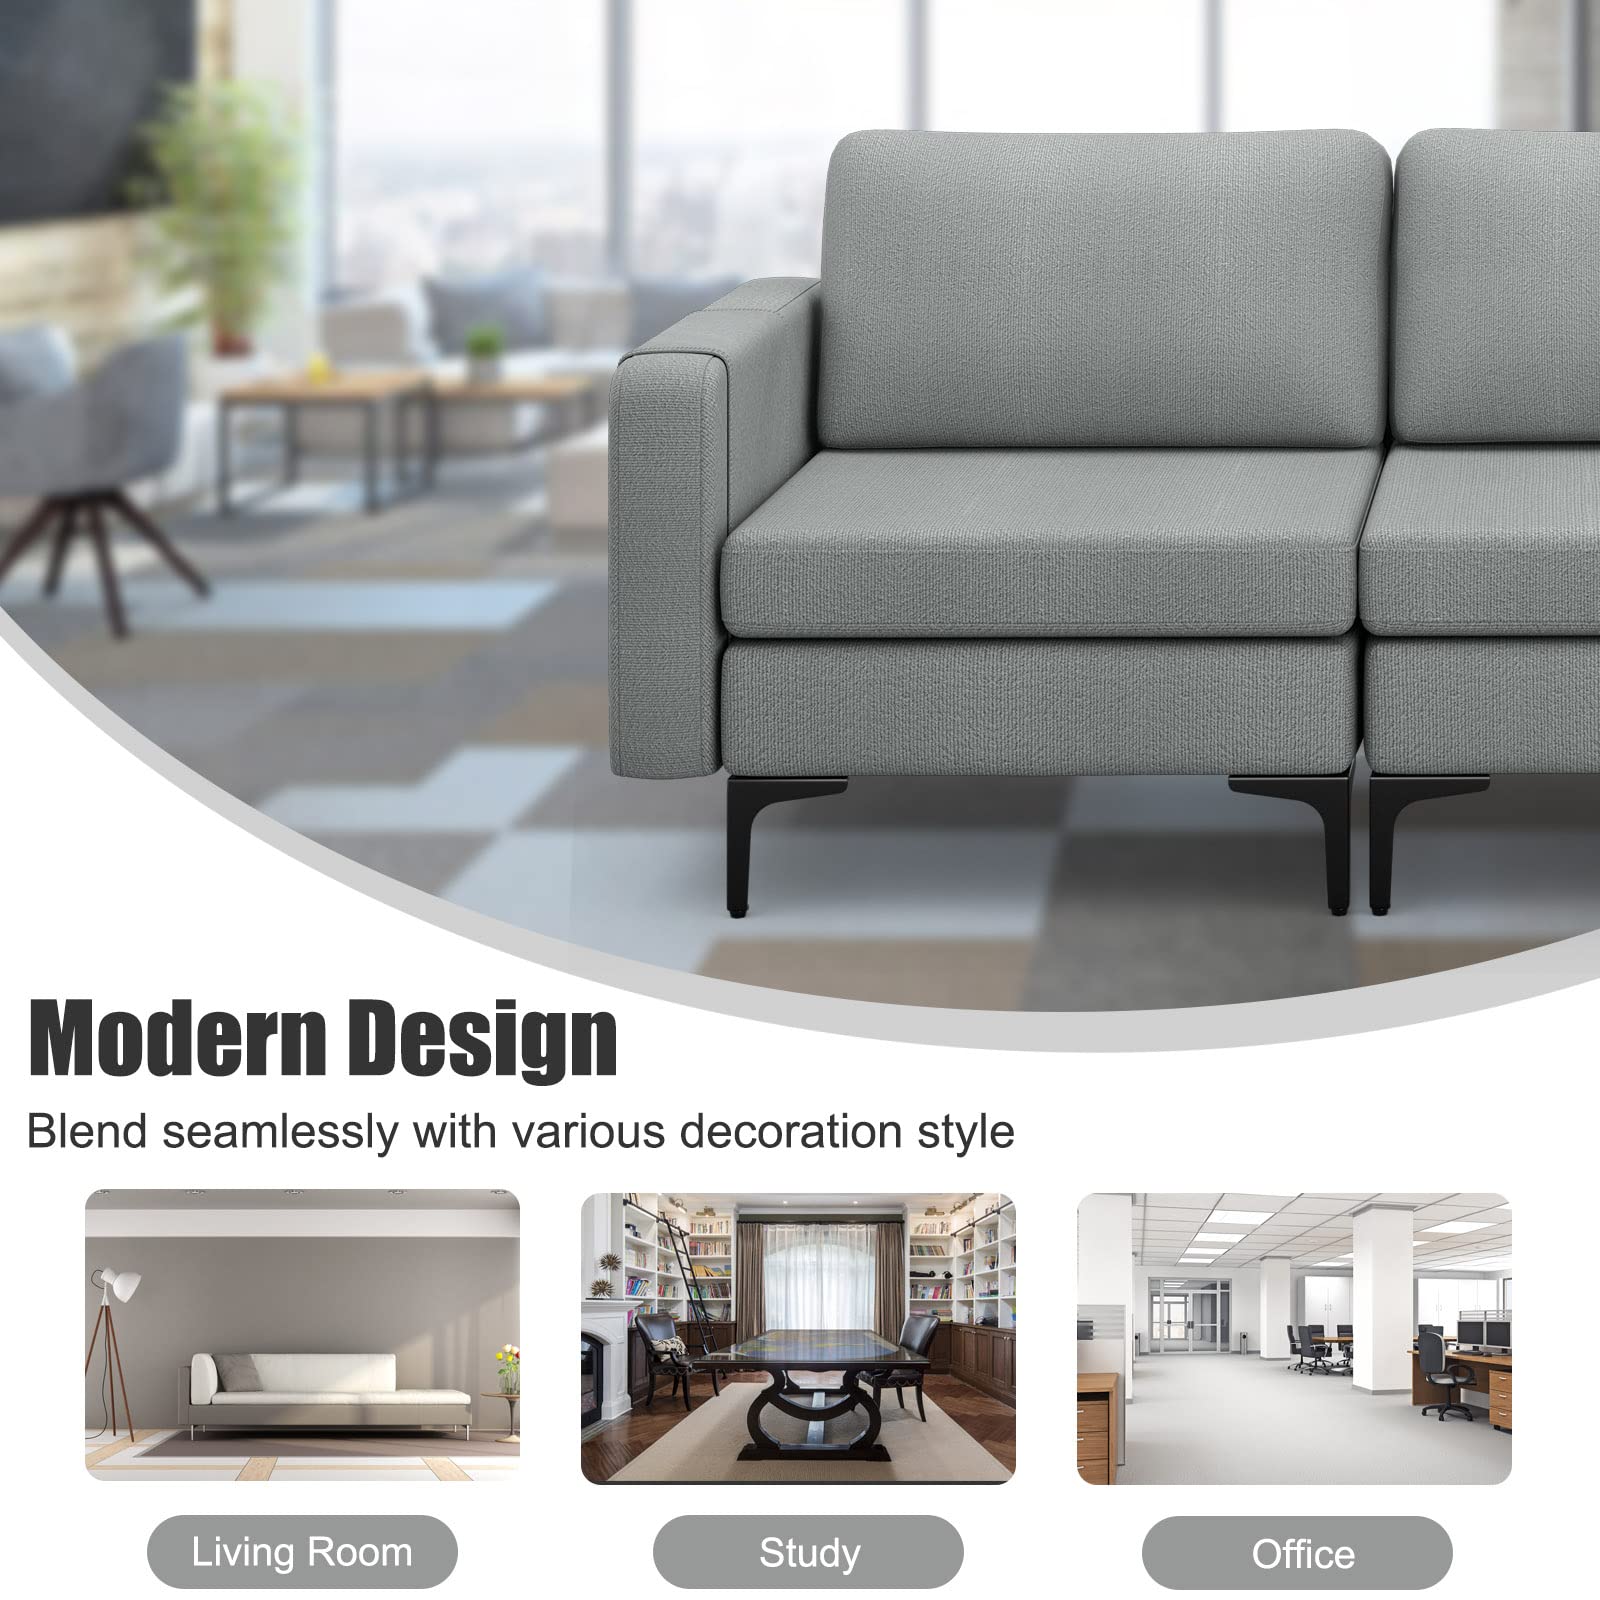 Giantex 3 Seat Sectional Sofa Couch, 94.5" L Modular Sleeper